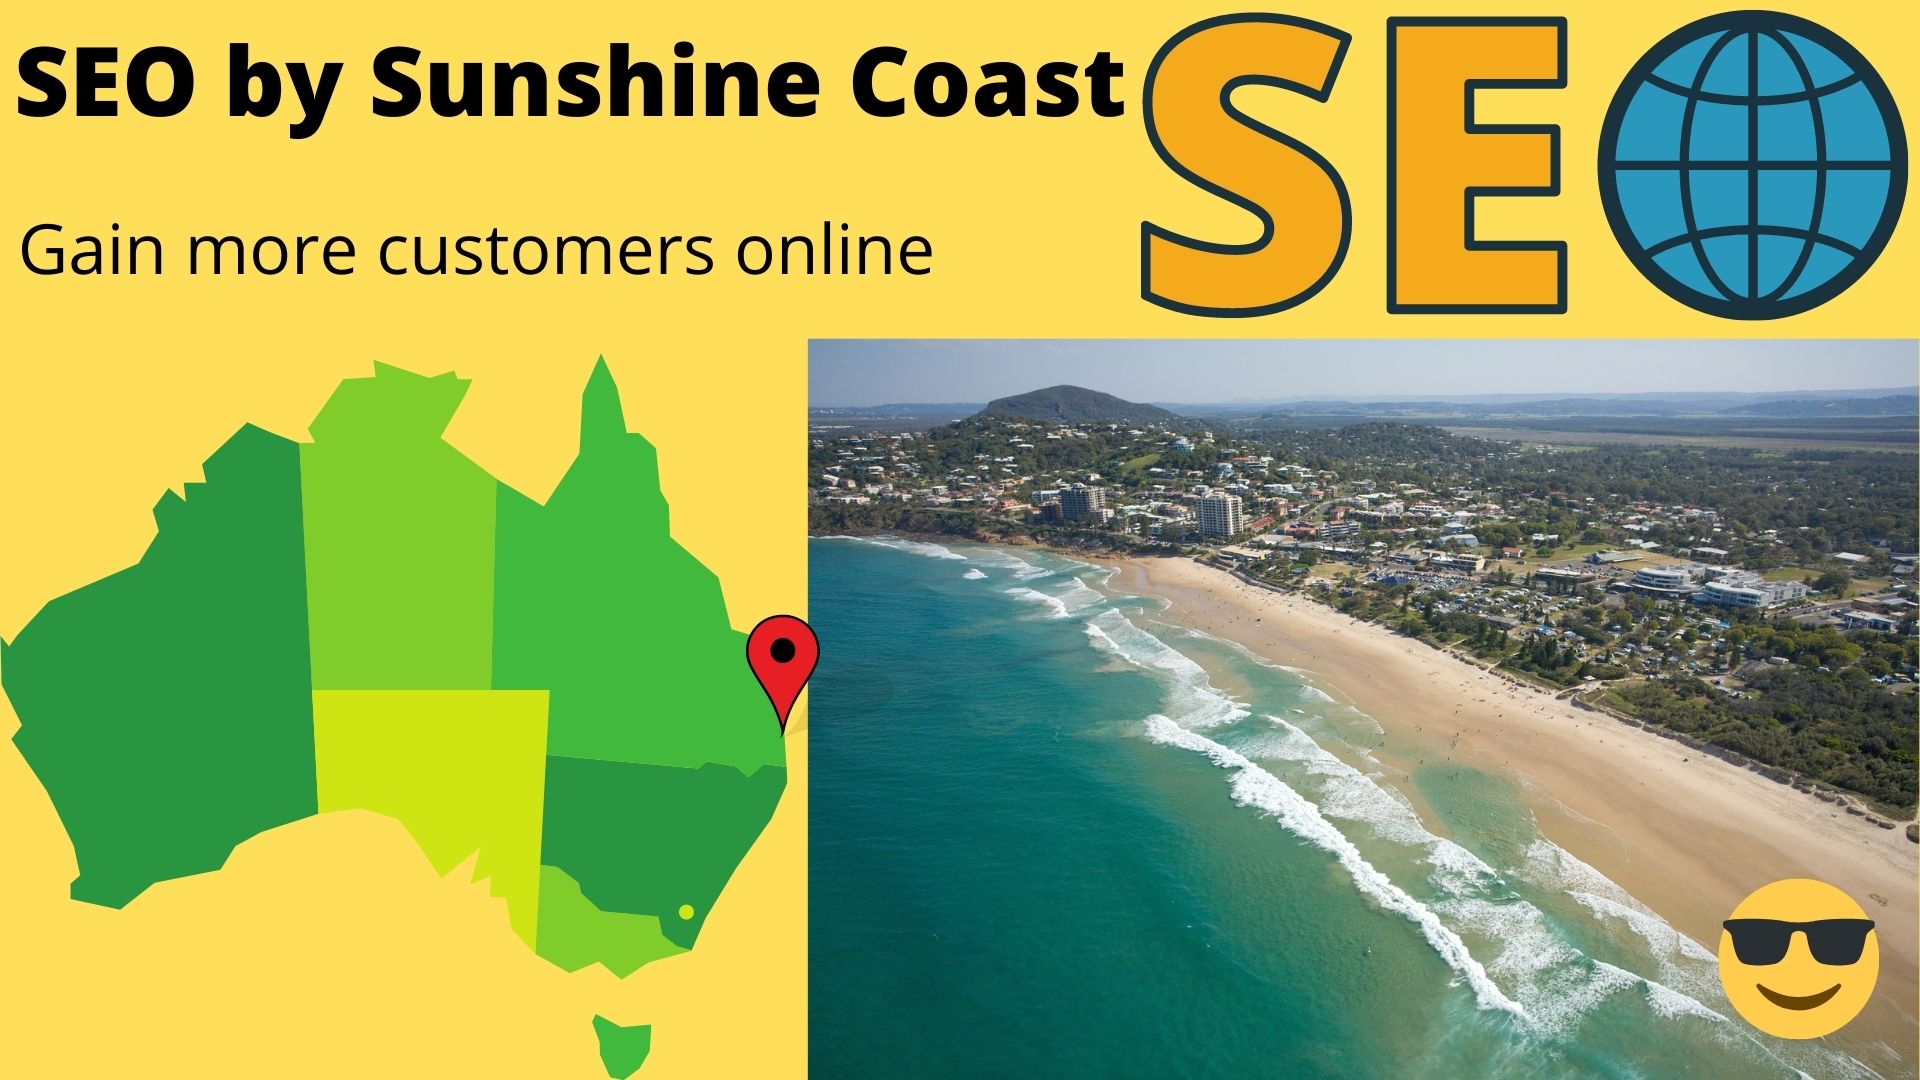 SEO by Australian City - Sunshine Coast